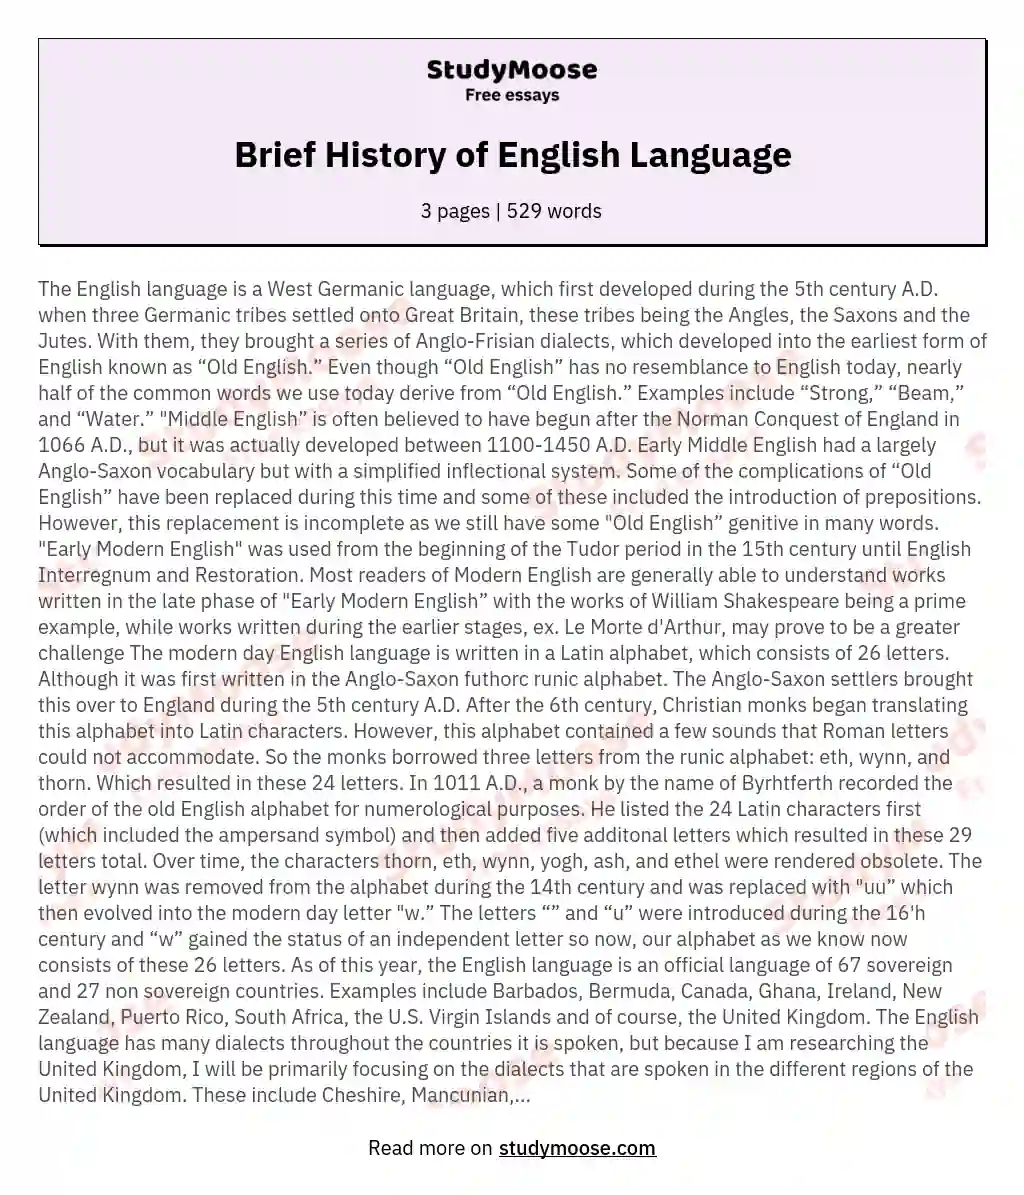 essay on evolution of standard english